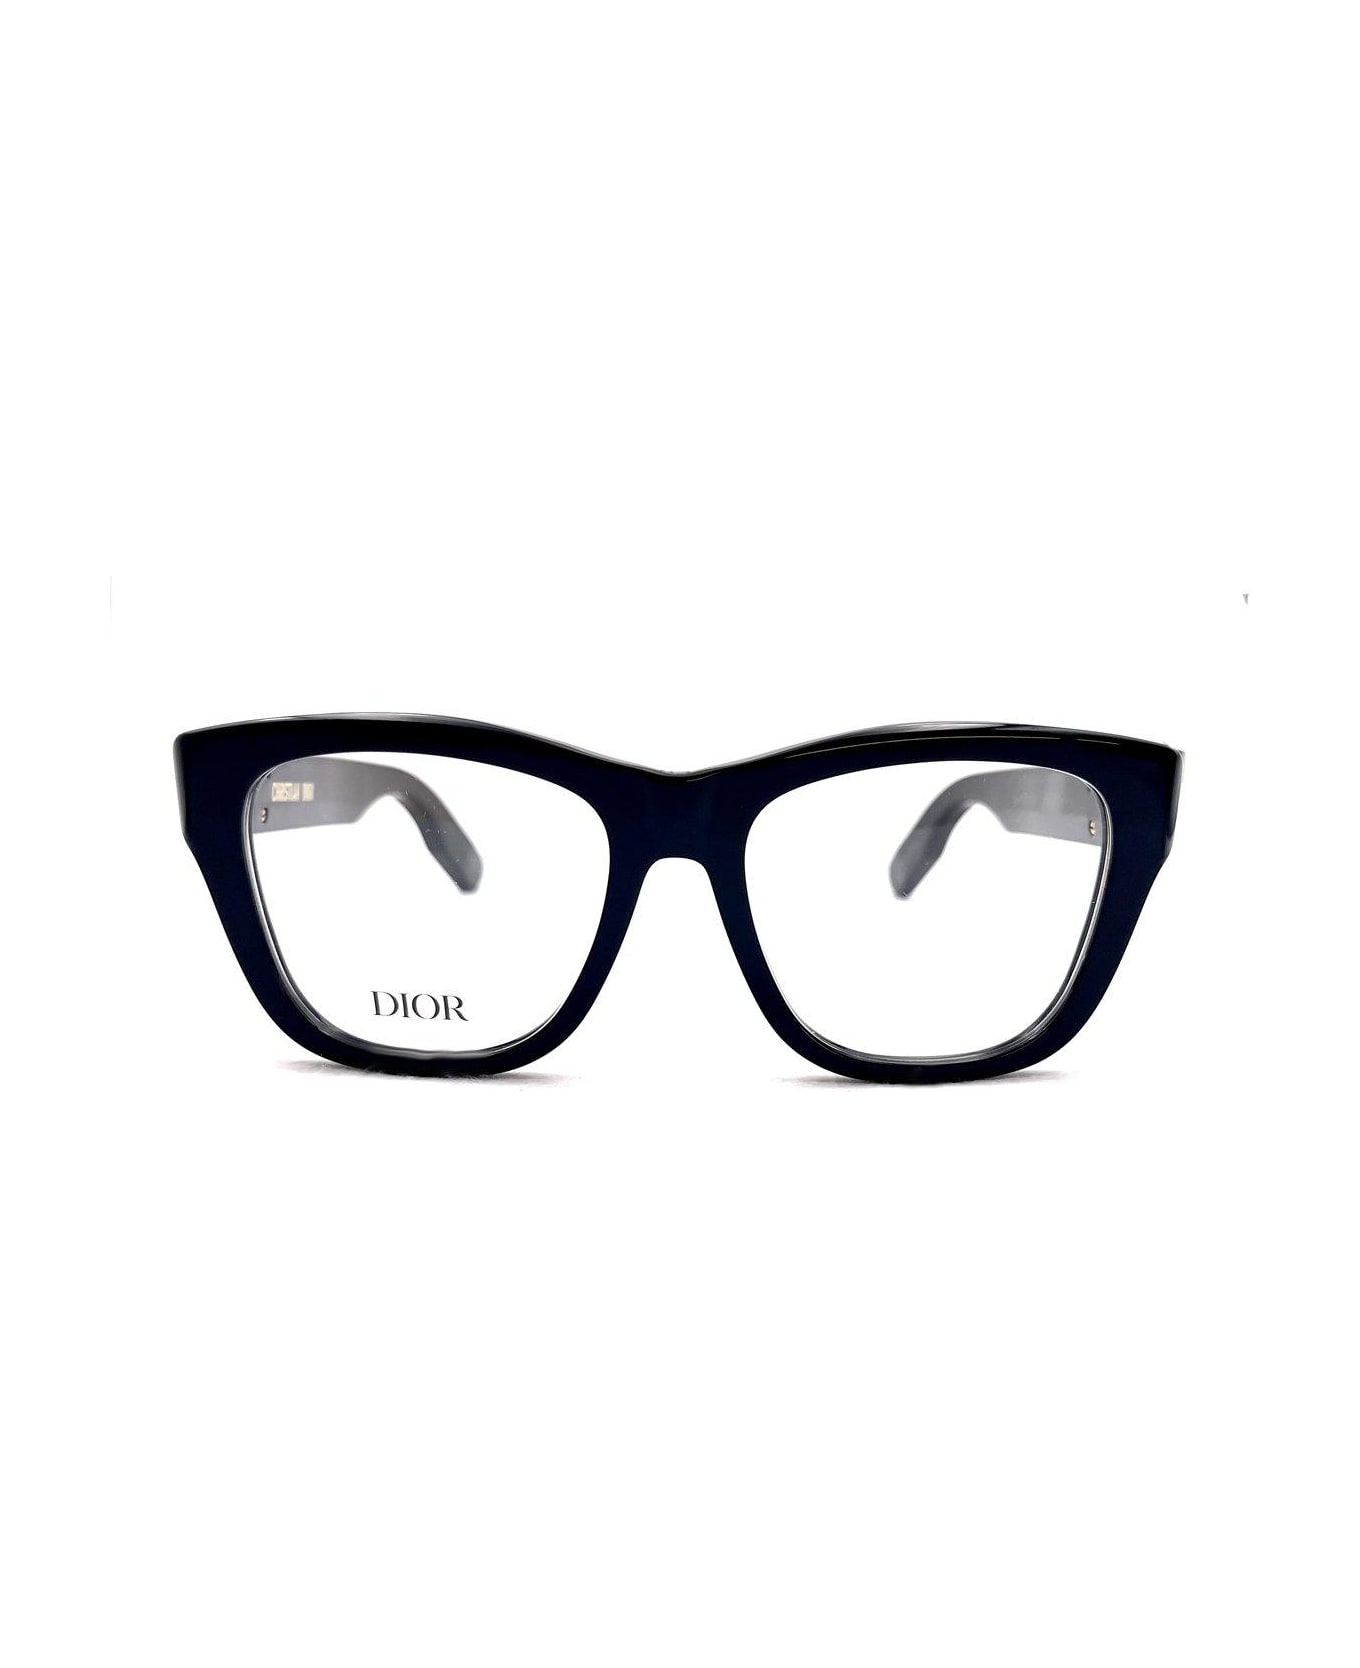 Dior Eyewear Square Frame Glasses - 1000 アイウェア